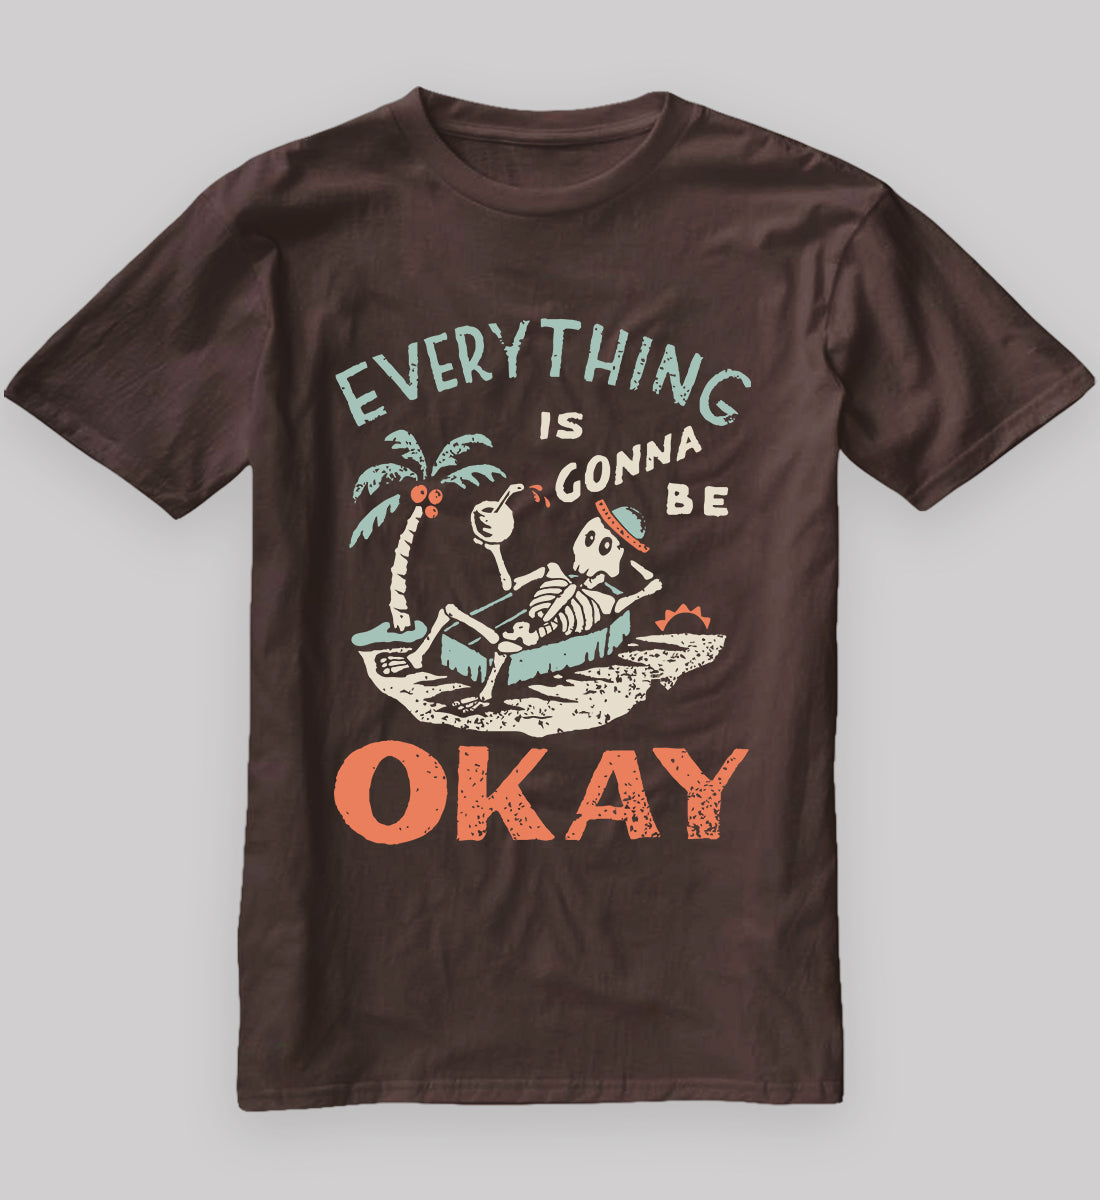 Okay T-Shirt